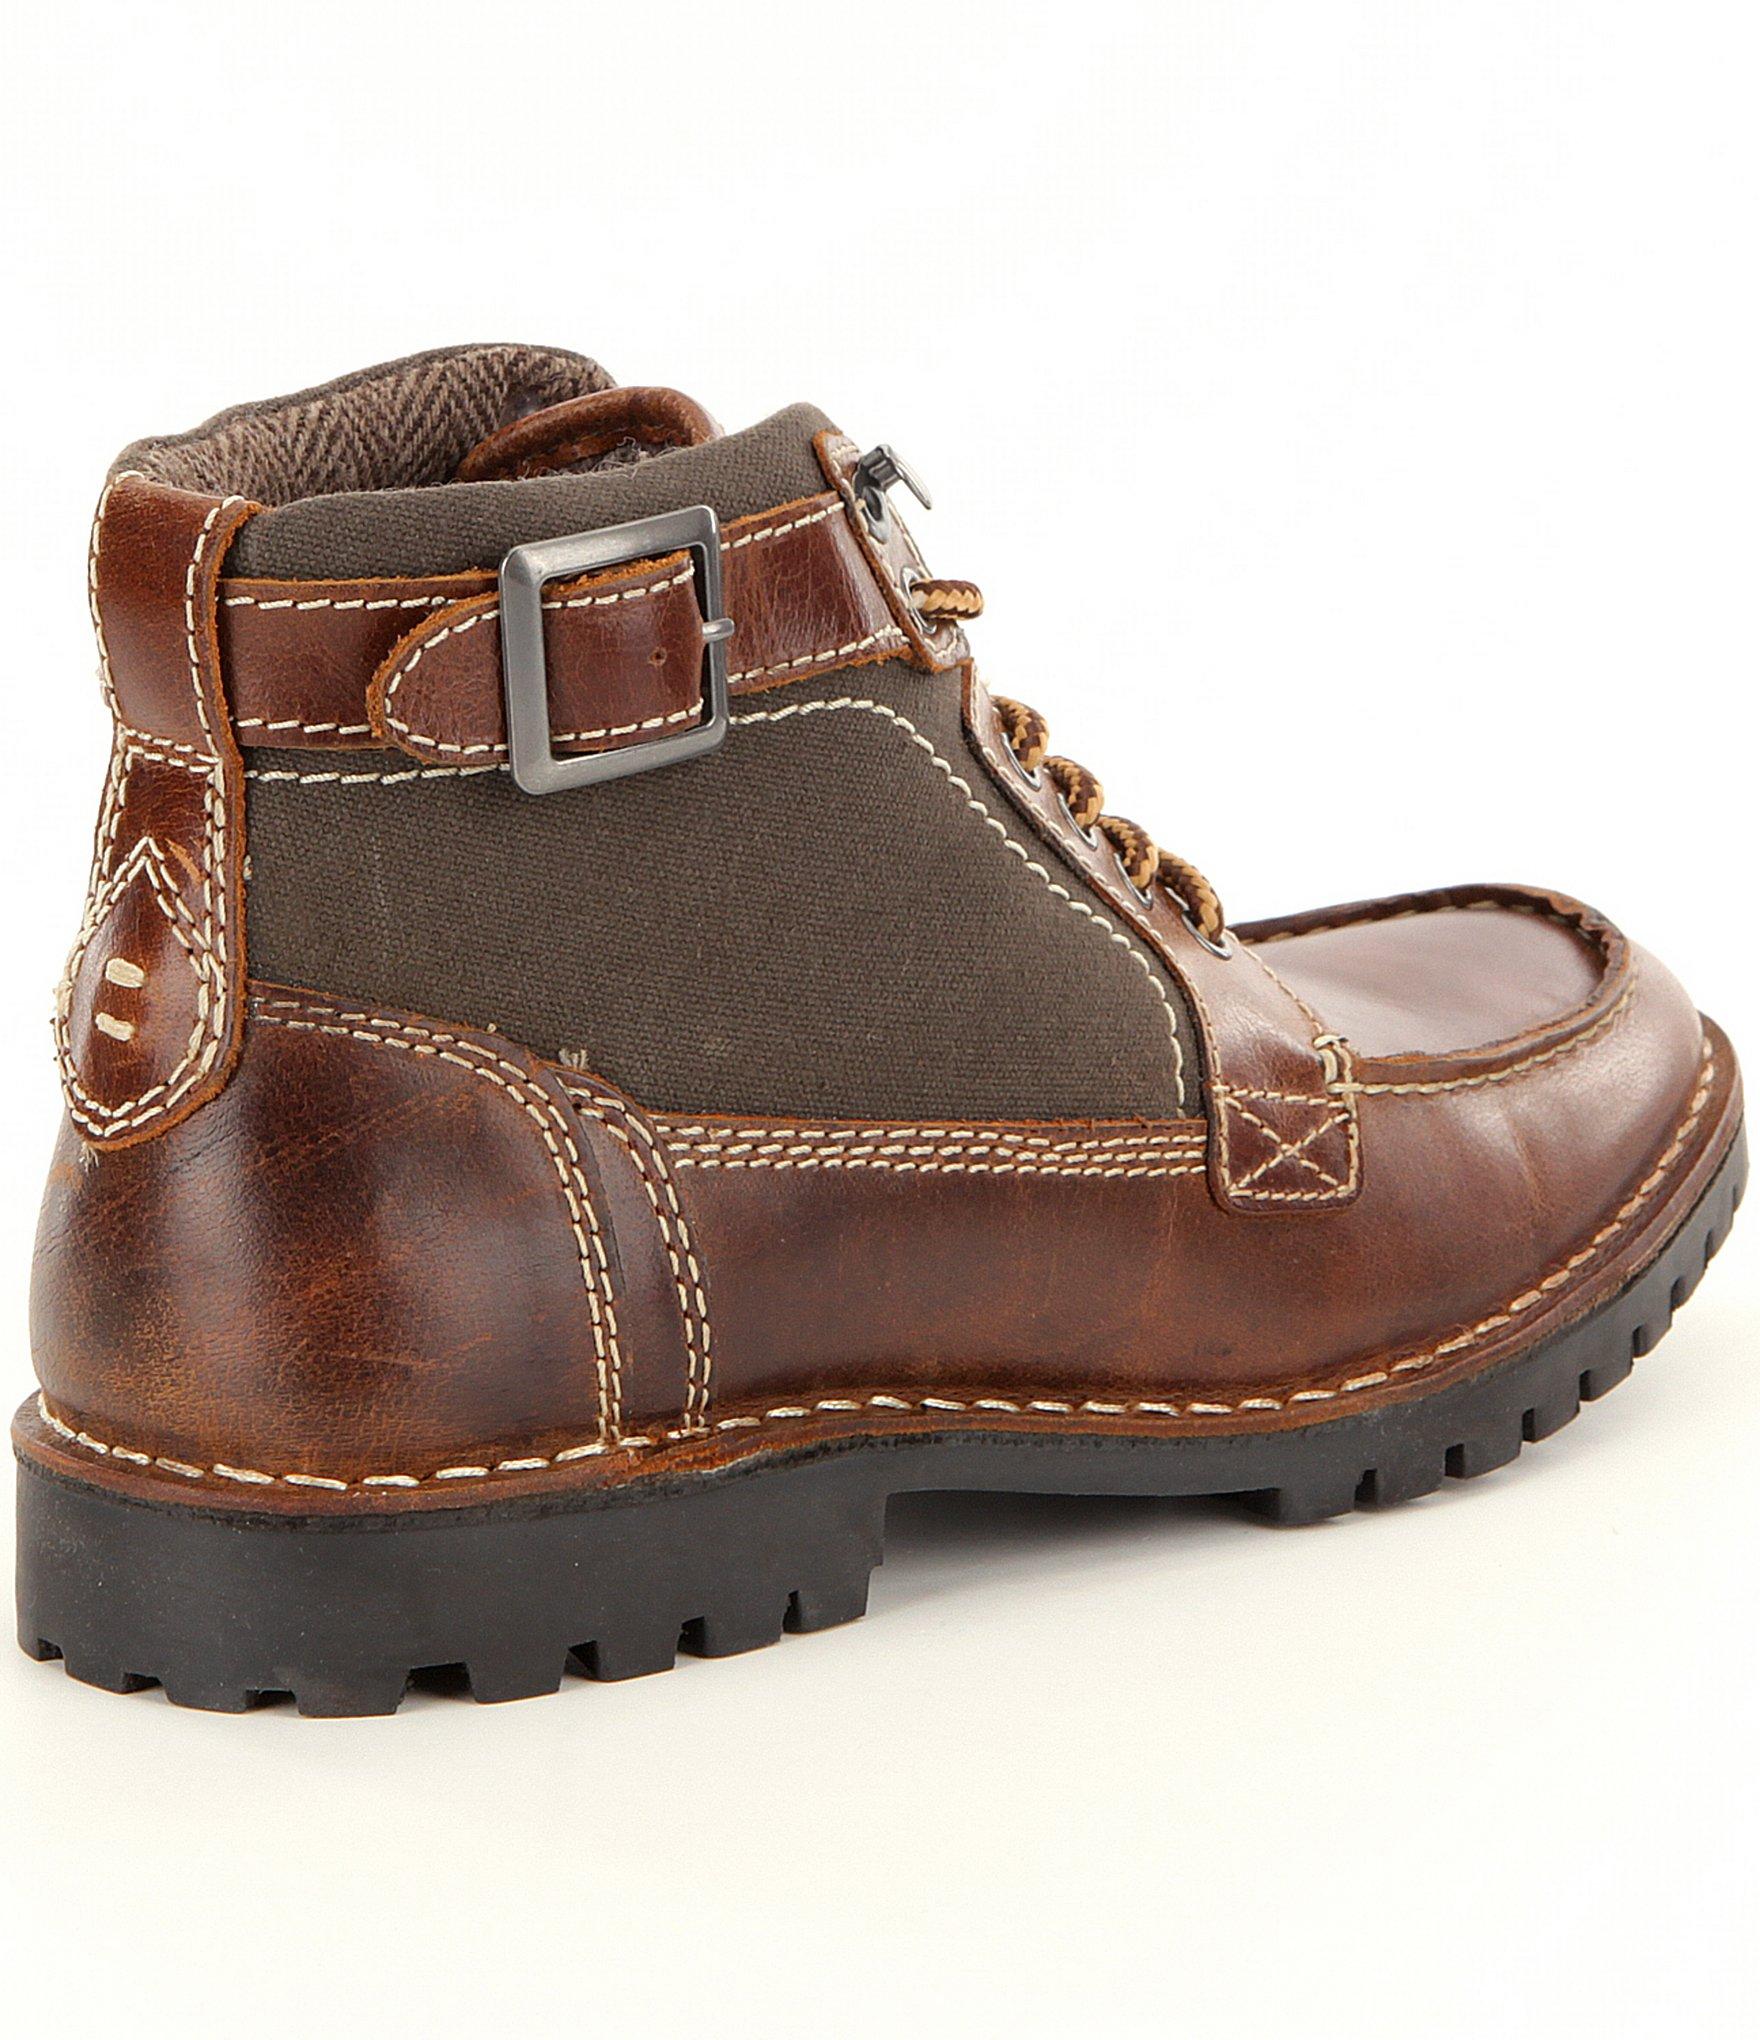 Lyst - Steve Madden Men´s Nummero Classic Boots in Brown for Men